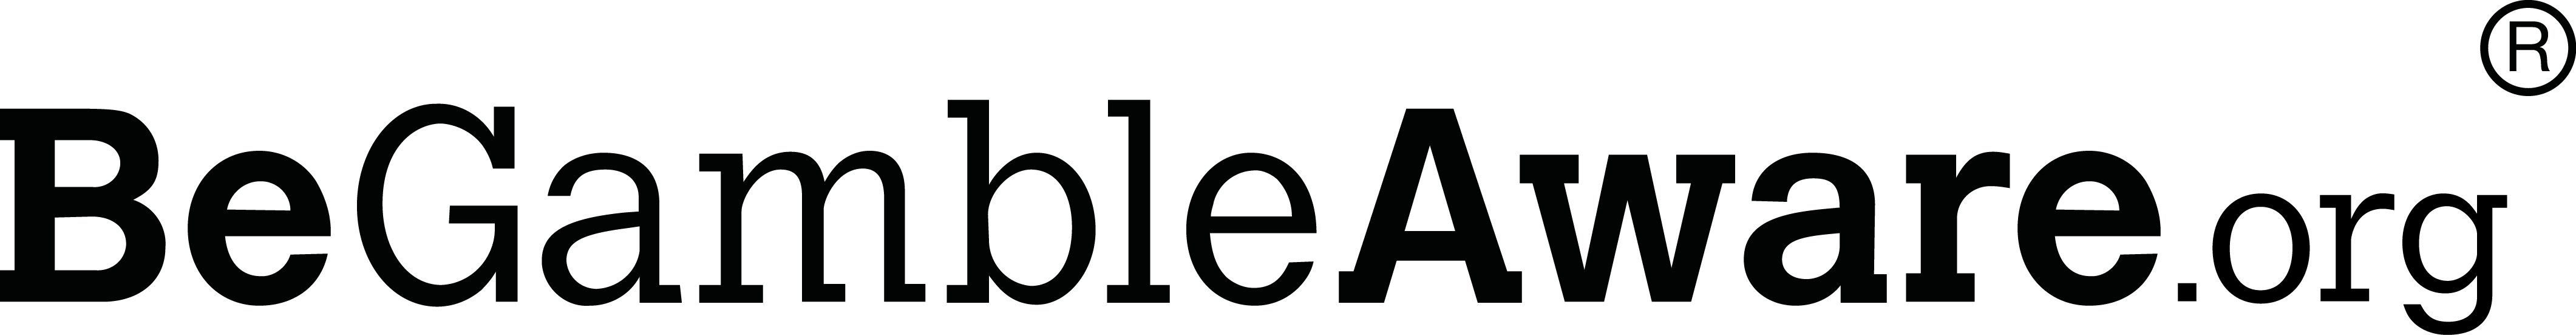 logo do site begambleaware